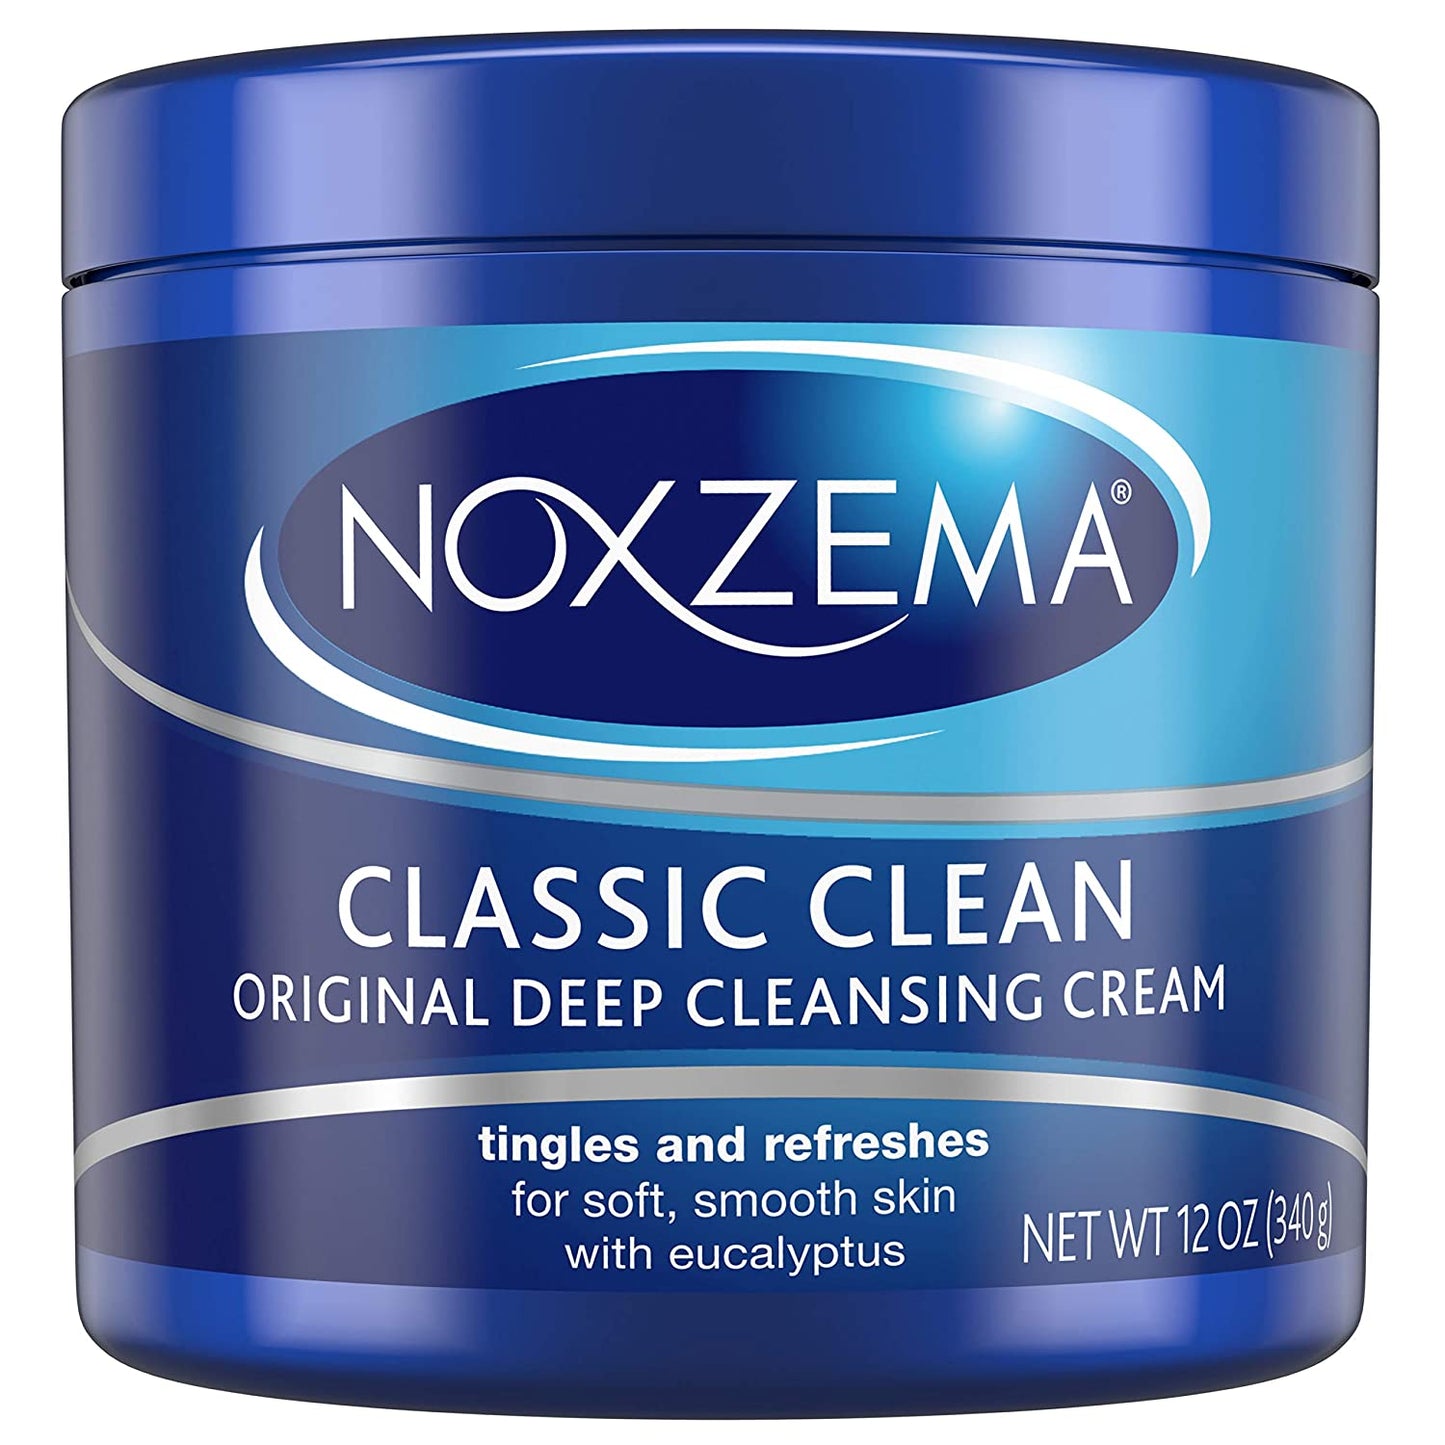 NOXZEMA Classic Clean Original Deep Cleansing Cream 12oz